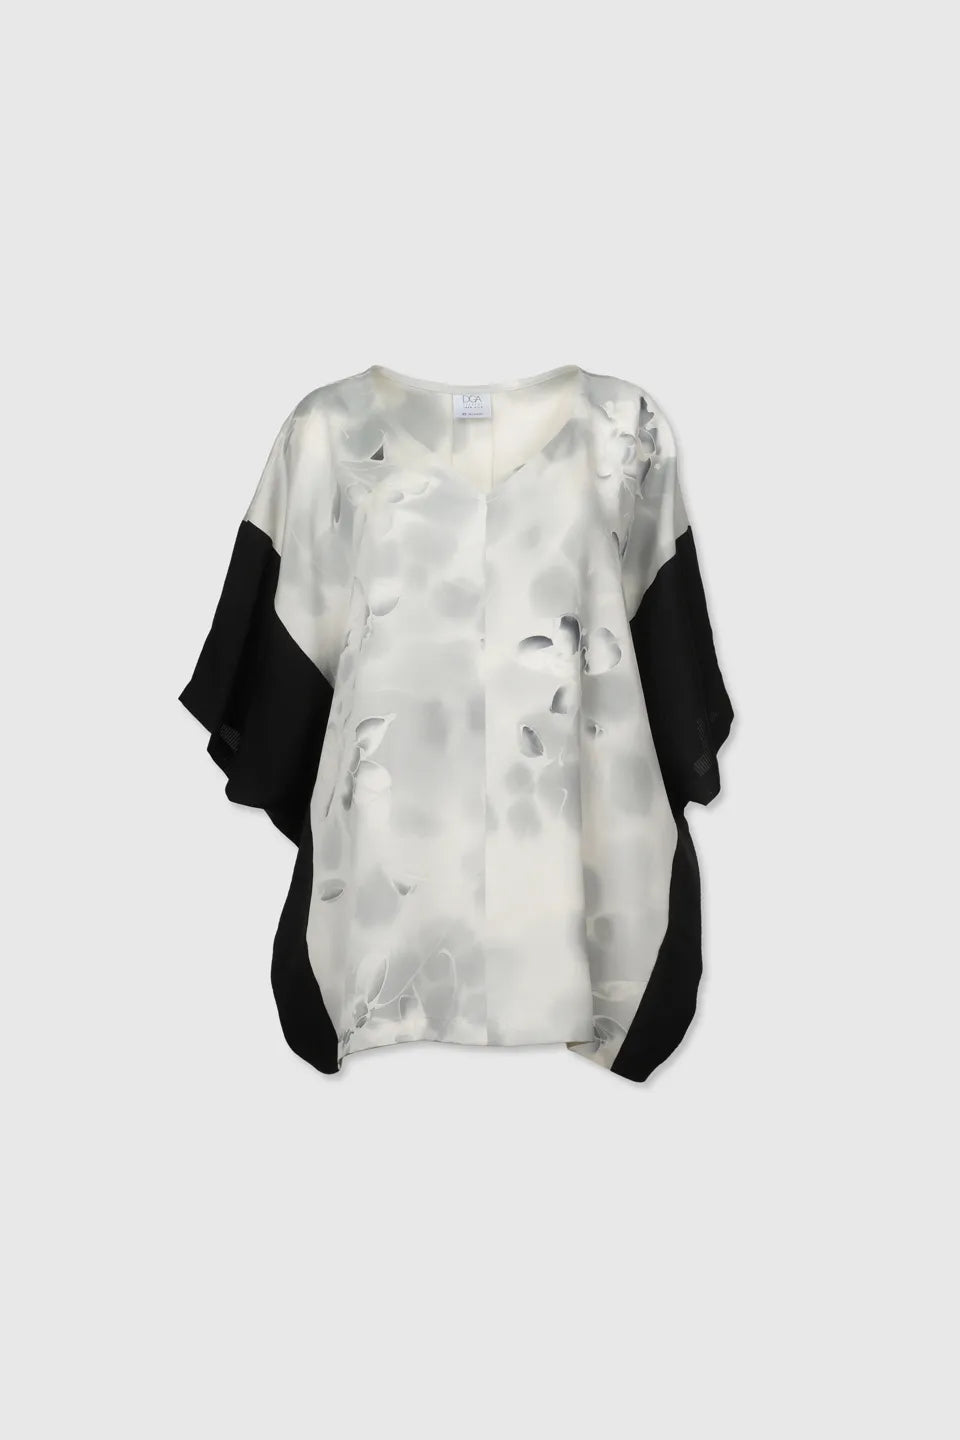 Black & Gray Patterned Silk Blouse